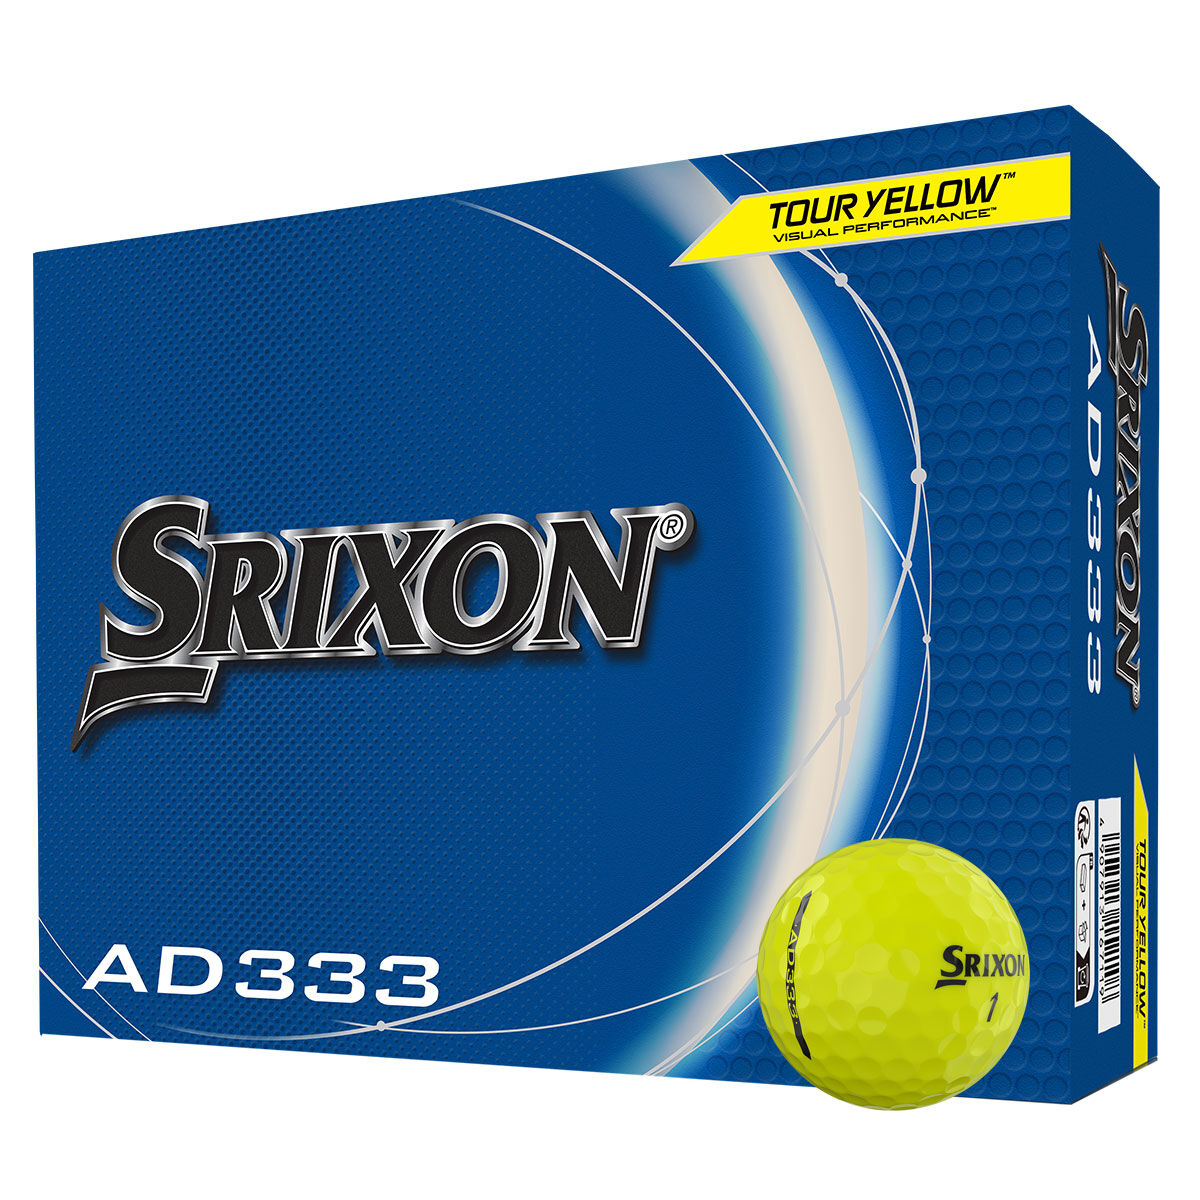 Srixon AD333 12 Golf Ball Pack, Mens, Tour yellow | American Golf von Srixon